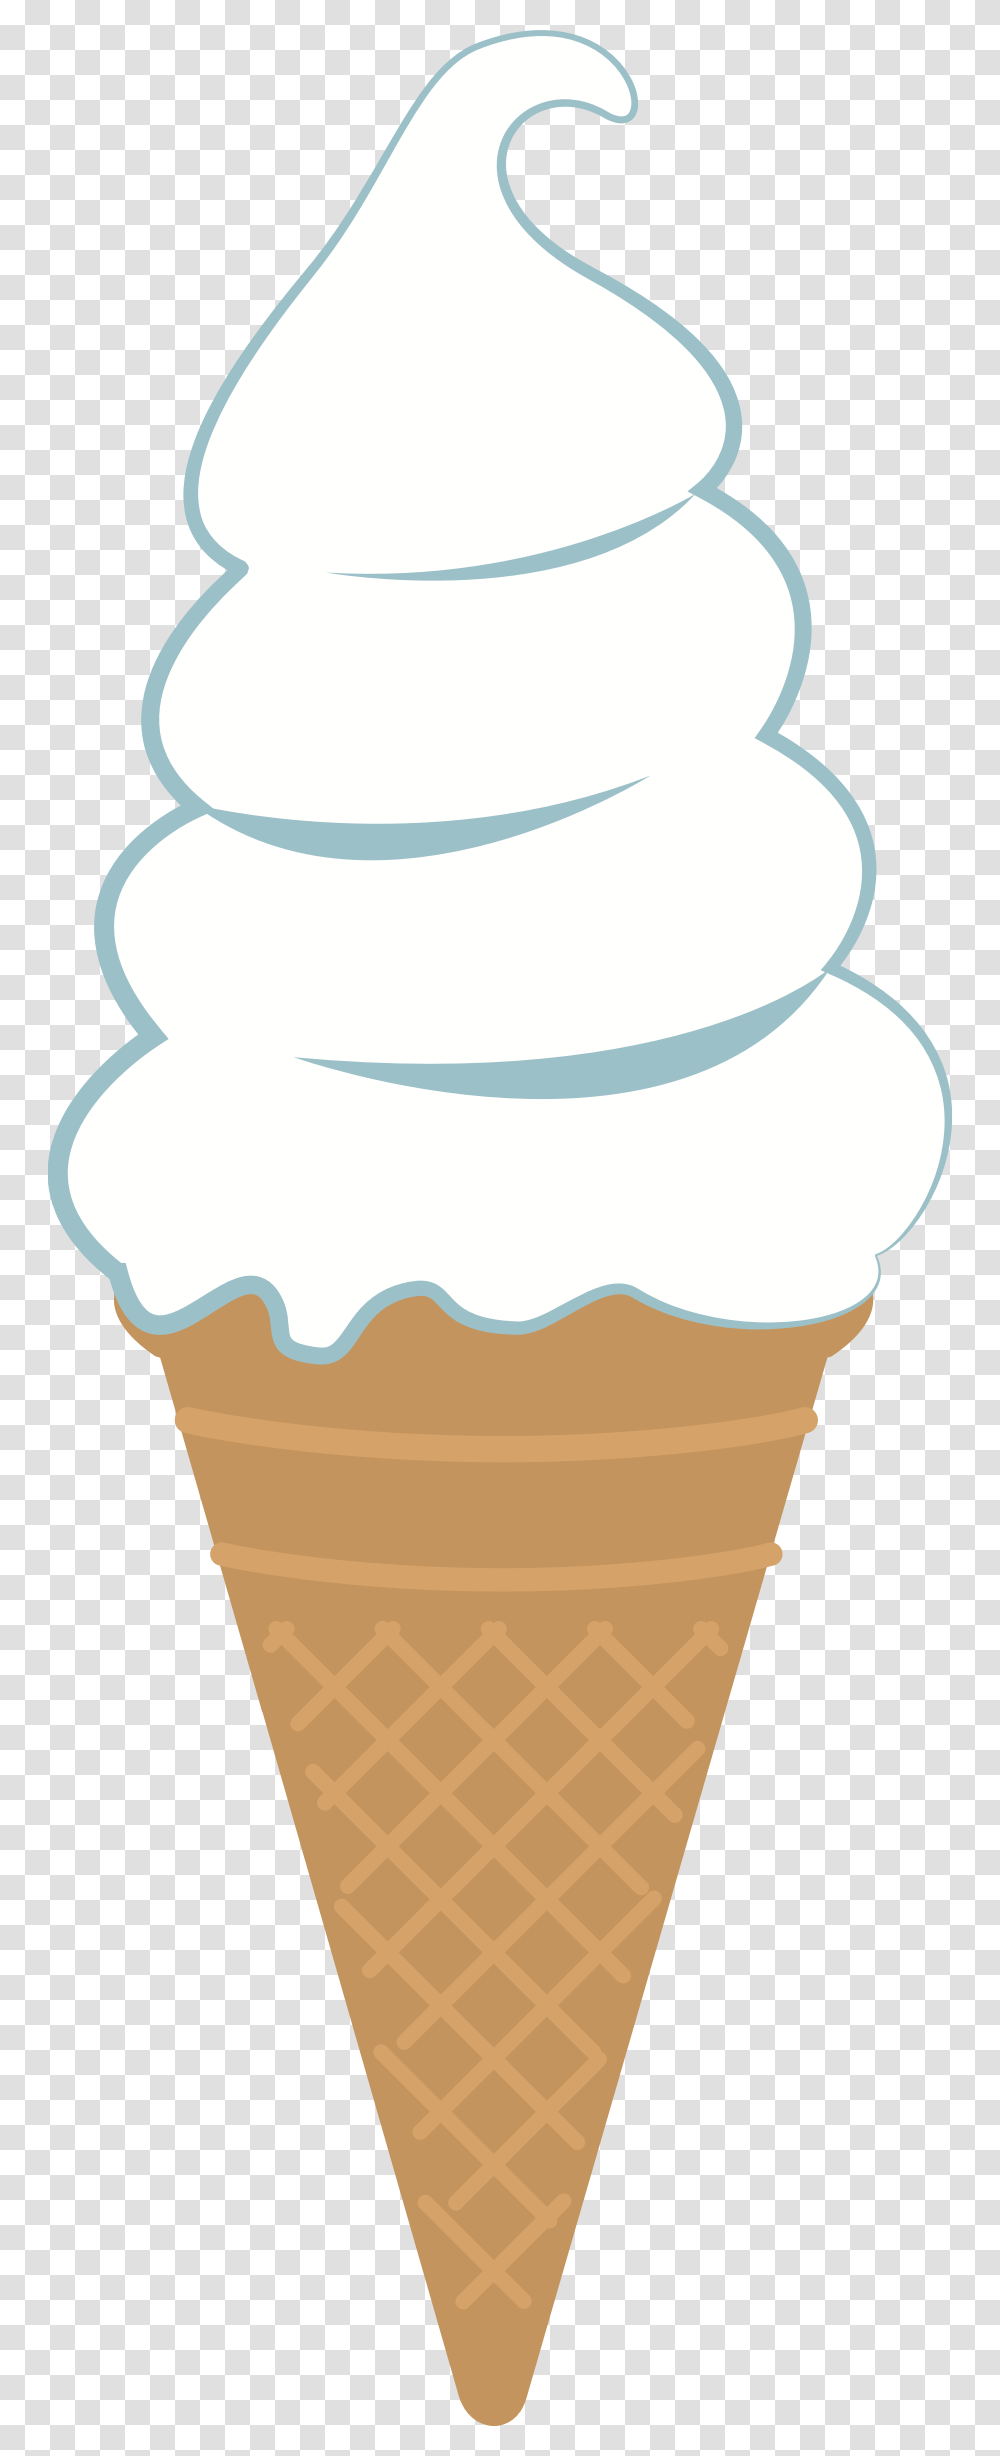 Cone Free Icecream Cone Clipart, Dessert, Food, Creme, Icing Transparent Png